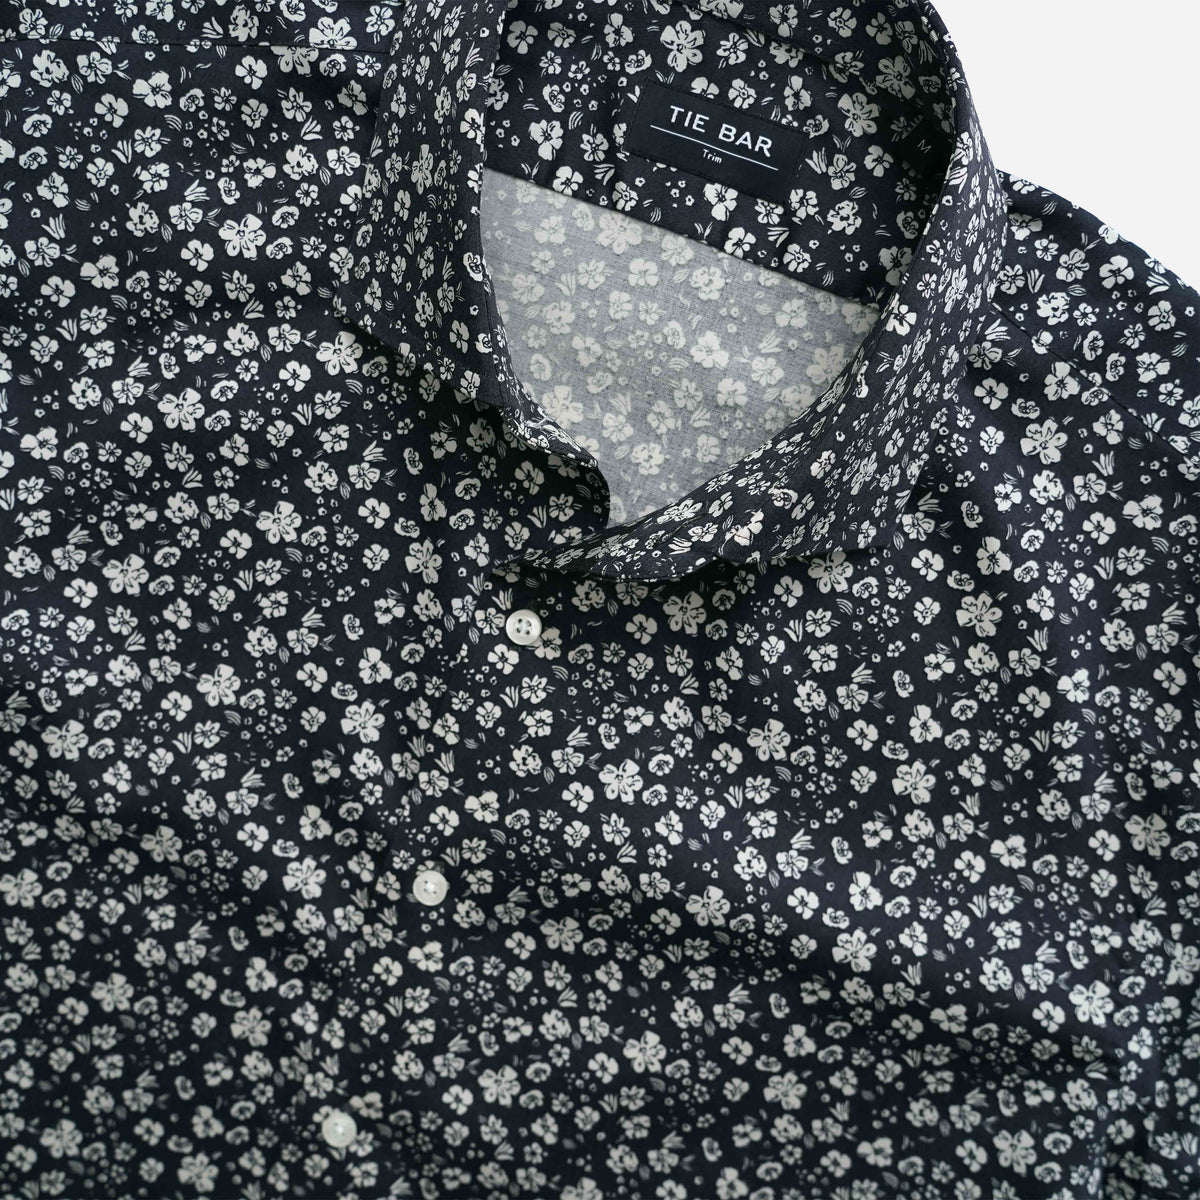 Floral Print Black Dress Shirt | Cotton Shirts | Tie Bar